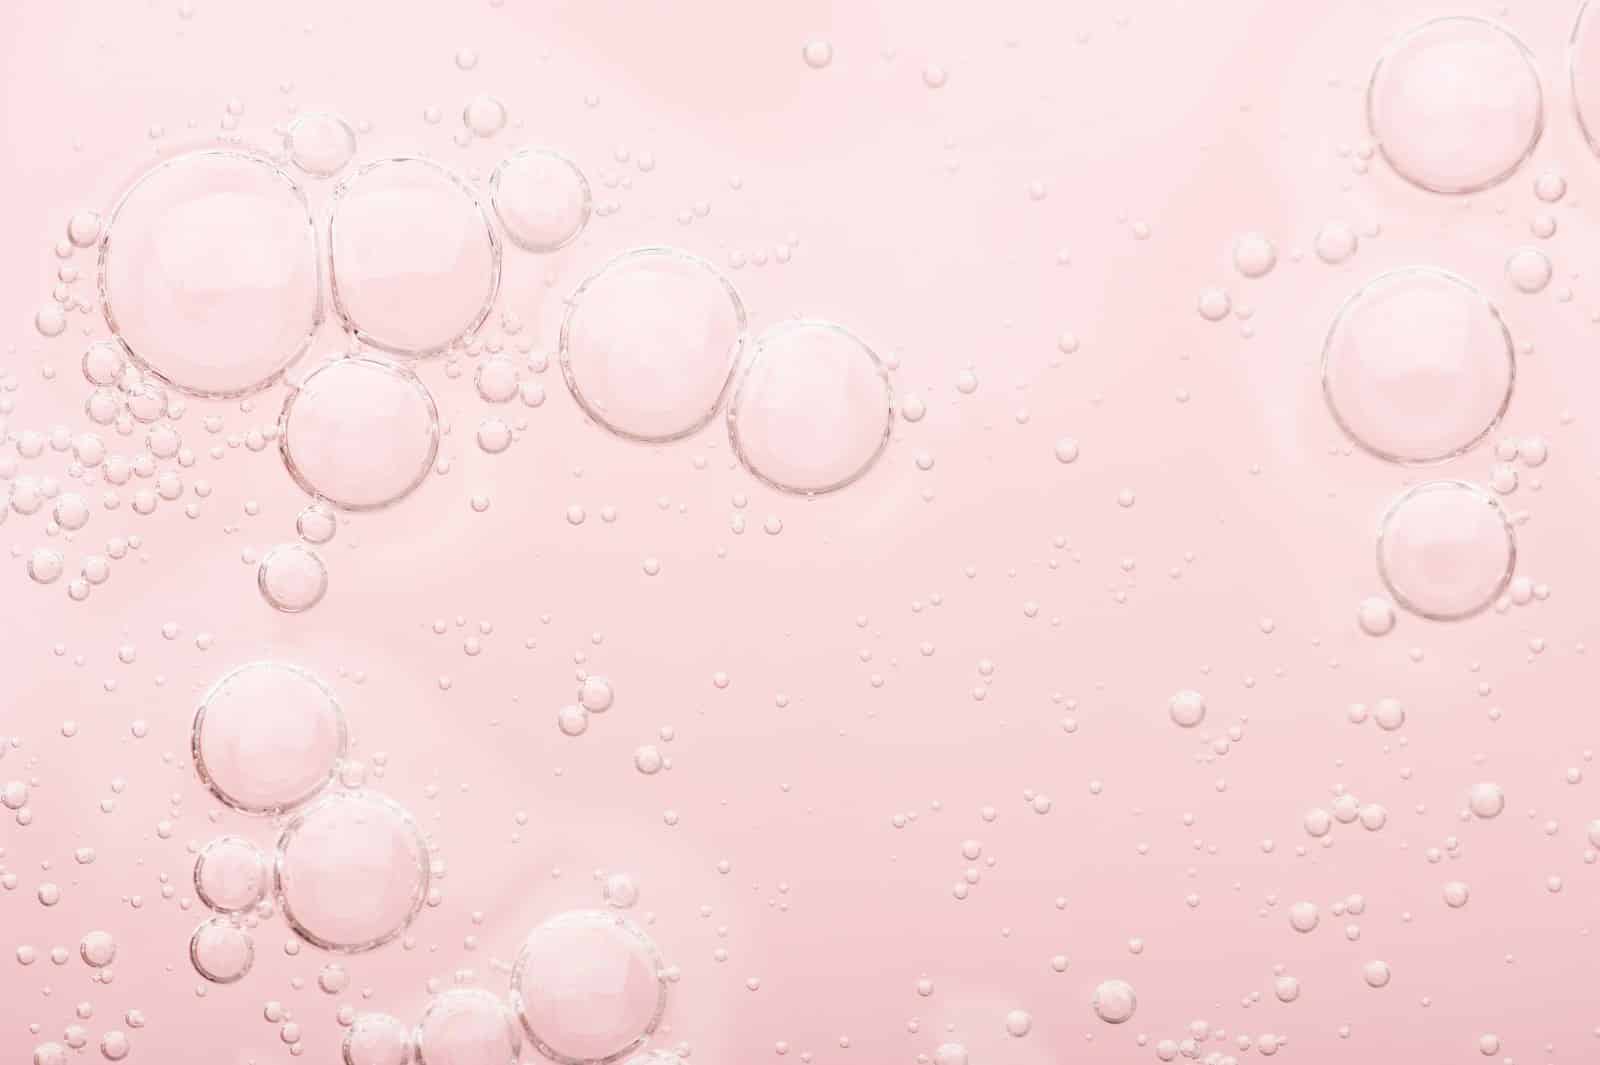 moisturizer skin cream and serum droplets on pink background